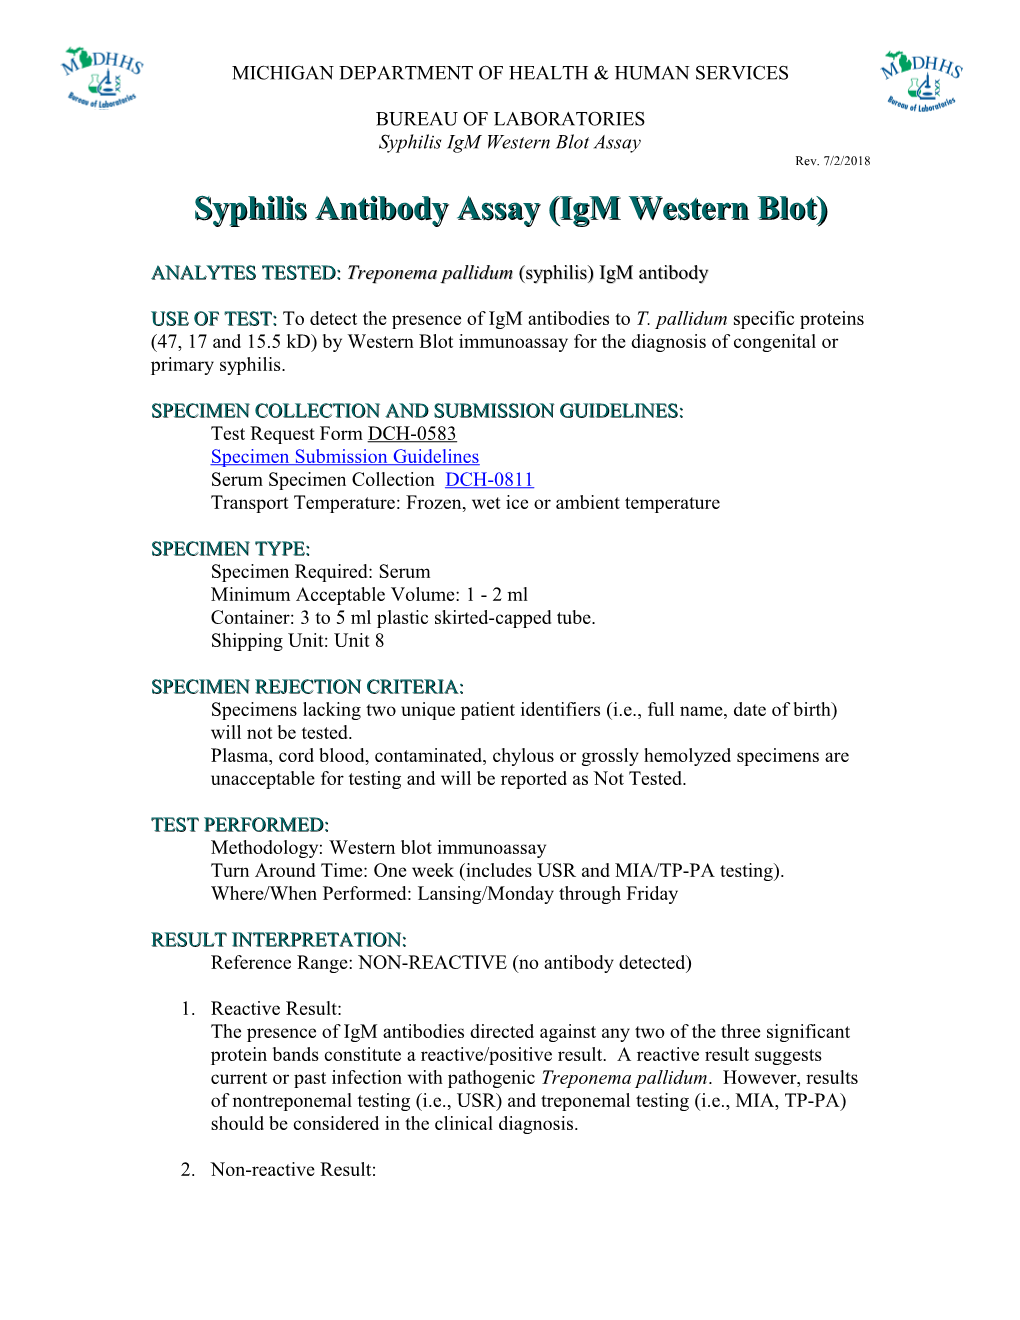 Syphilis Antibody Assay (Igm Western Blot)